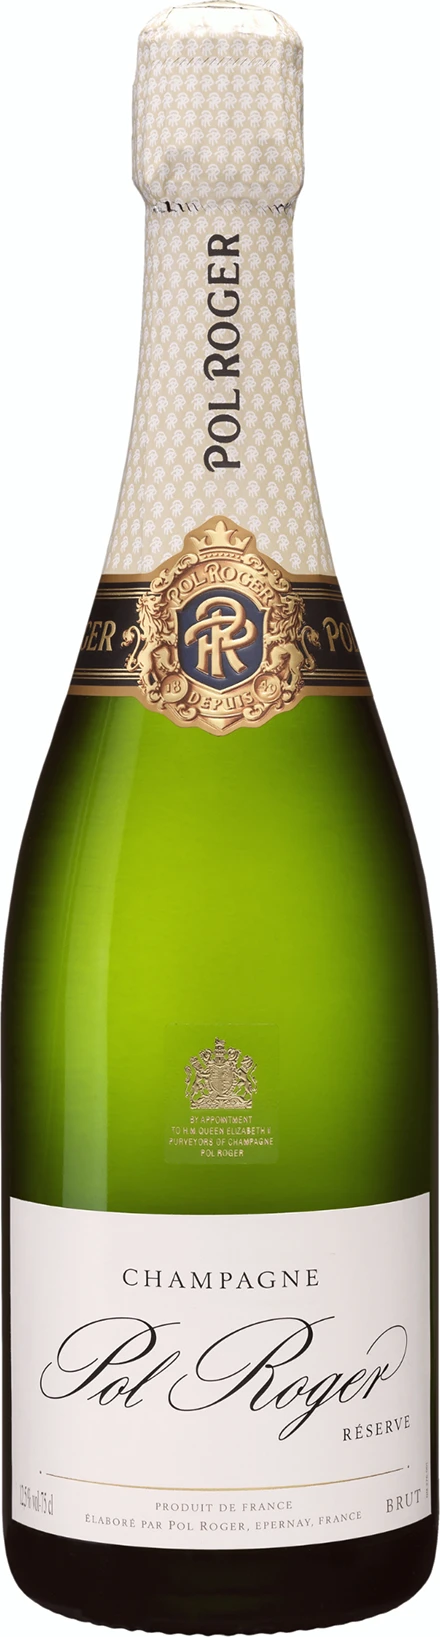 Champagne Pol Roger, Brut Réserve Nabuchodonosor 